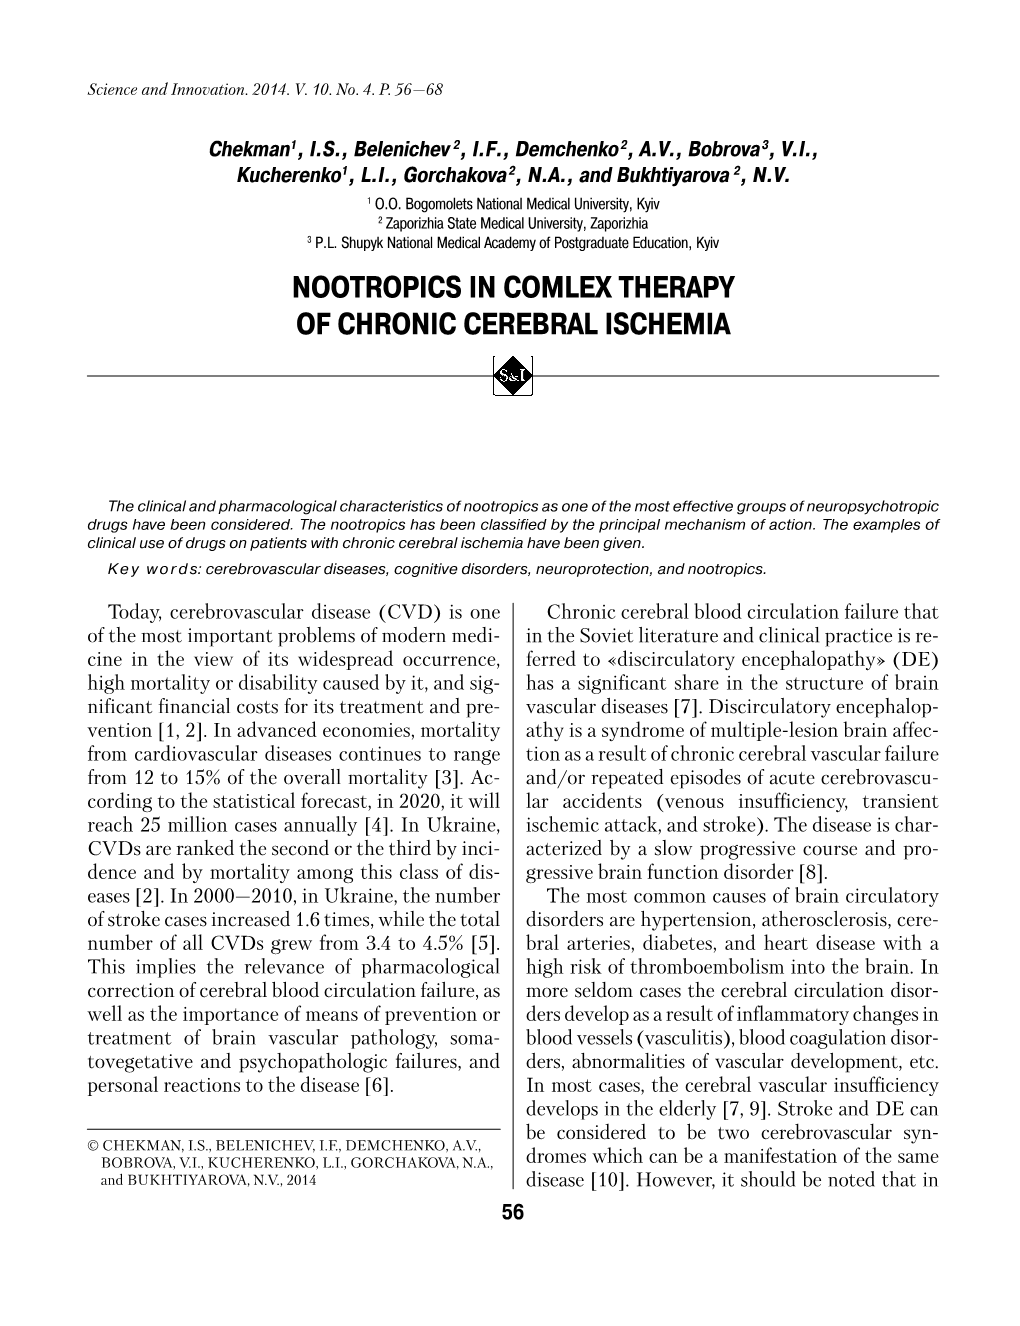 Nootropics in Comlex Therapy of Chronic Cerebral Ischemia